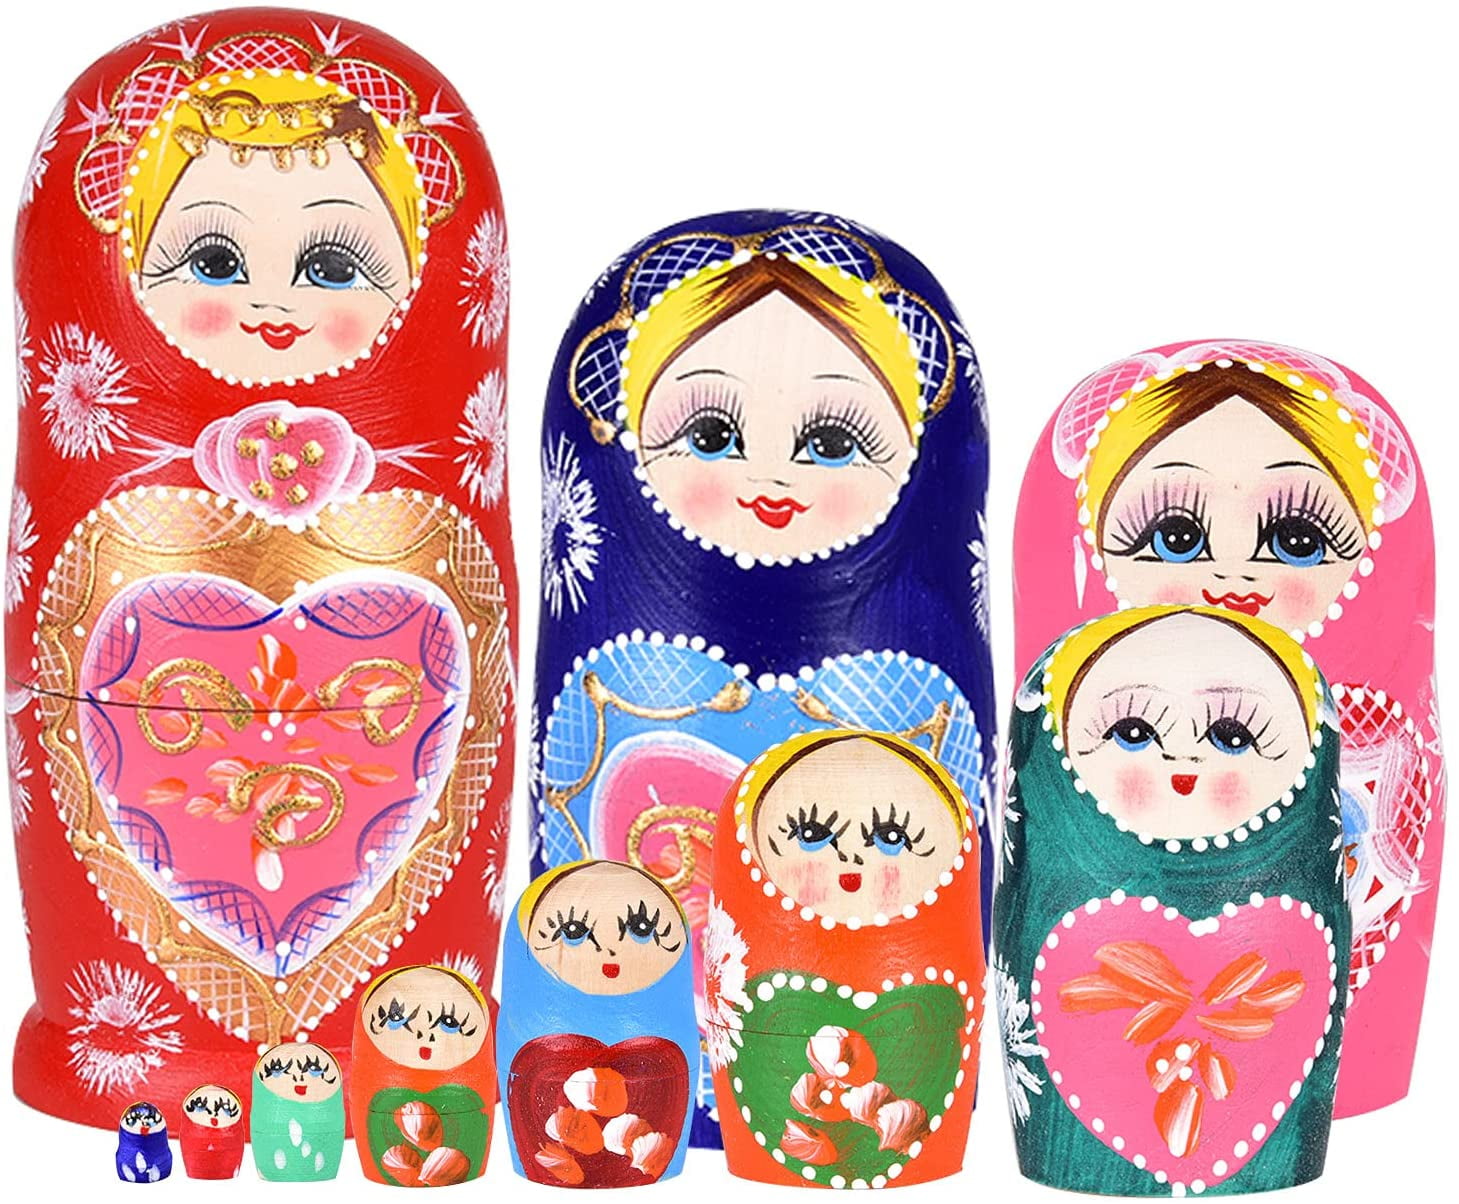 Matryoshka Print Russian Dollhouse Miniatures Barbie House Decorations Book Covers Dollhouse Wallpaper